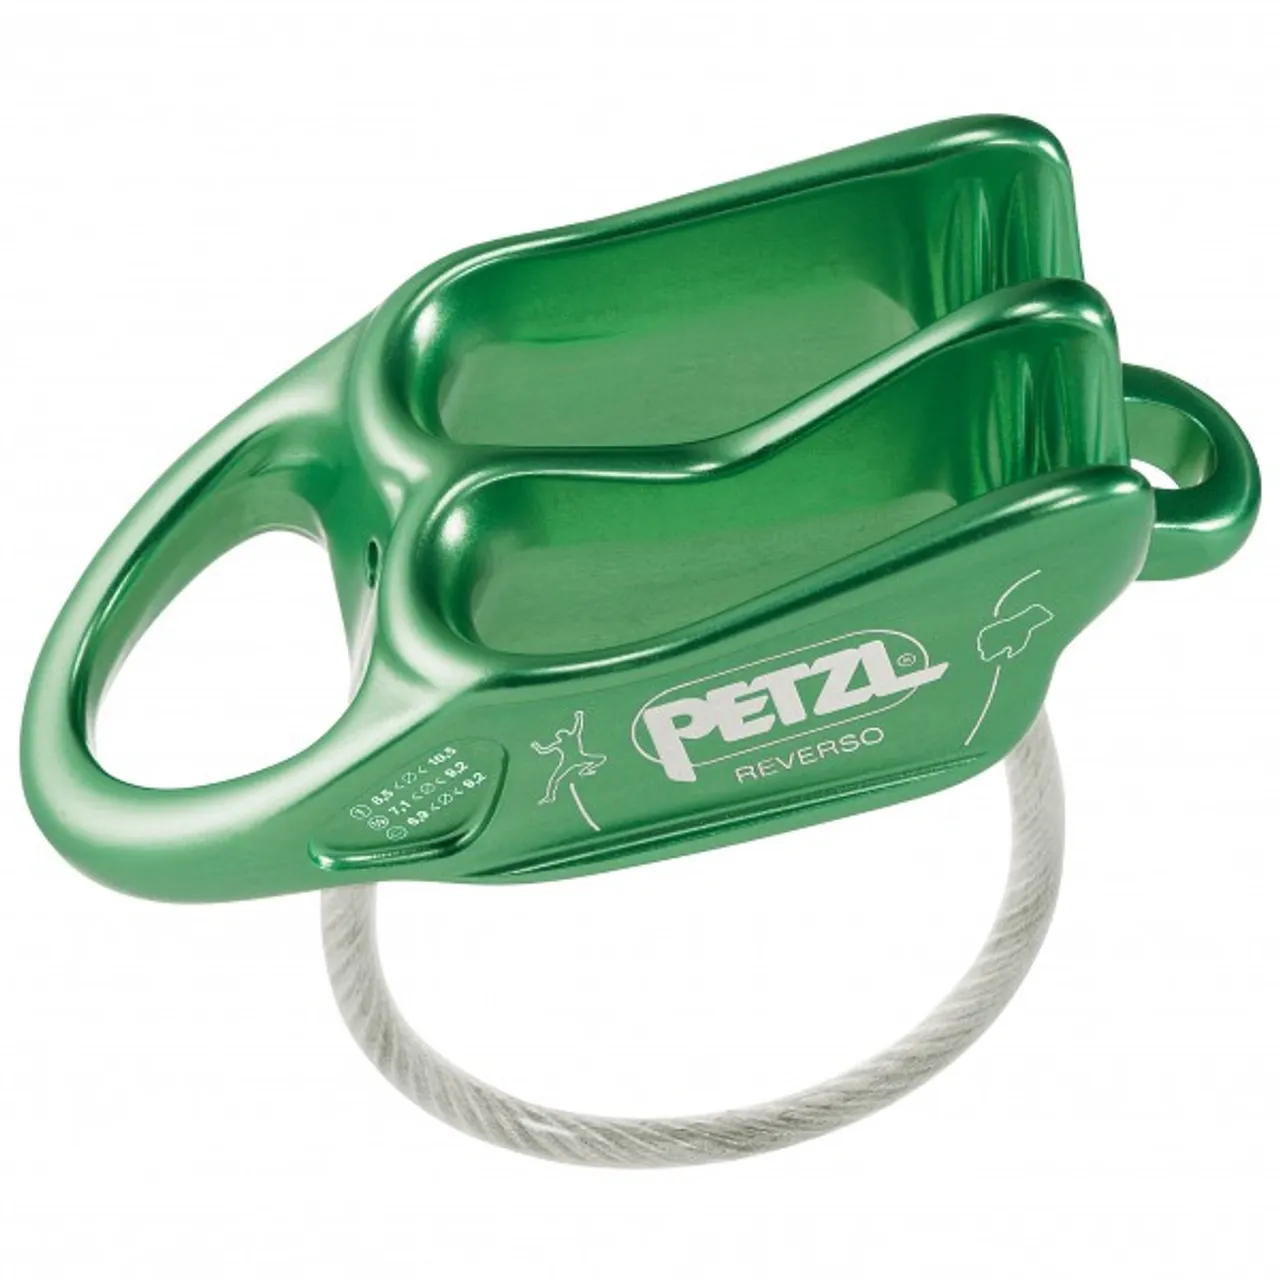 Petzl - Reverso - Belay device green